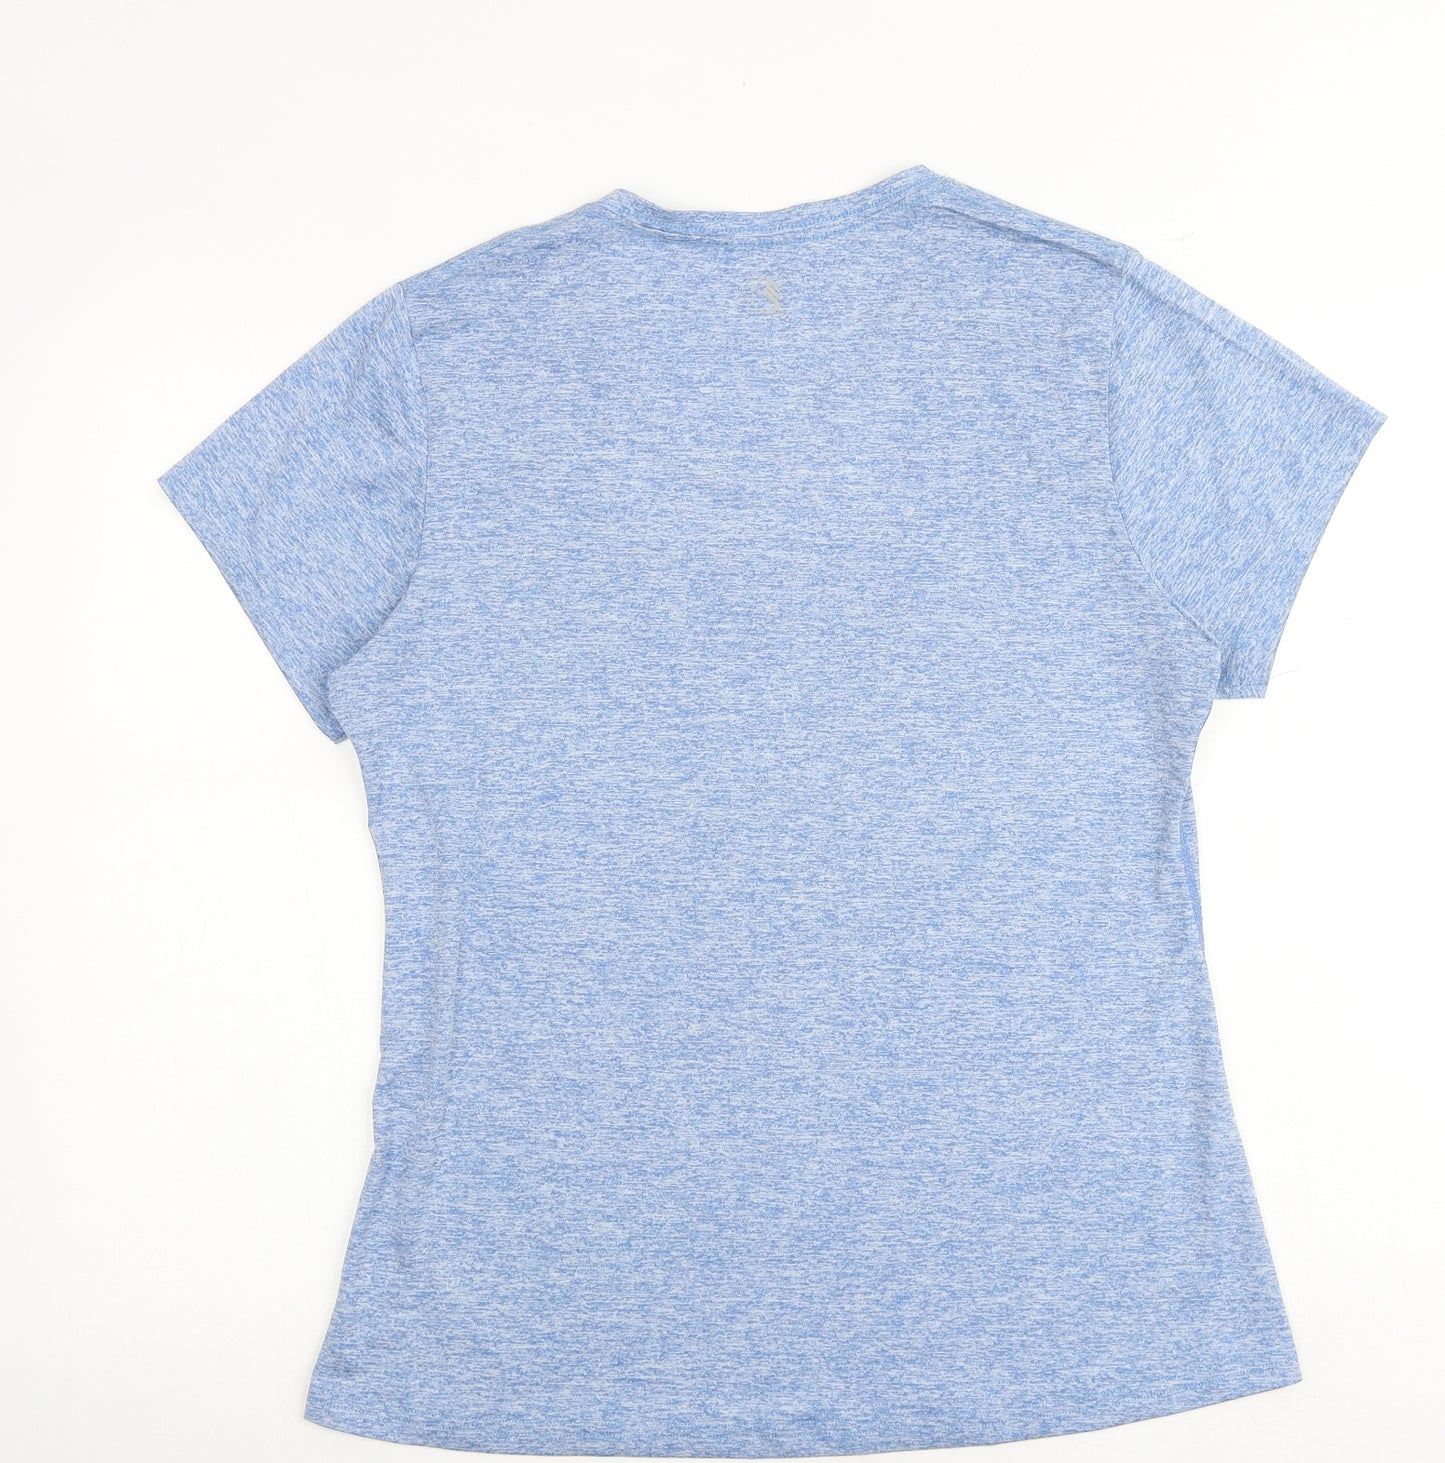 IcyZone Womens Blue Polyester Basic T-Shirt Size L V-Neck